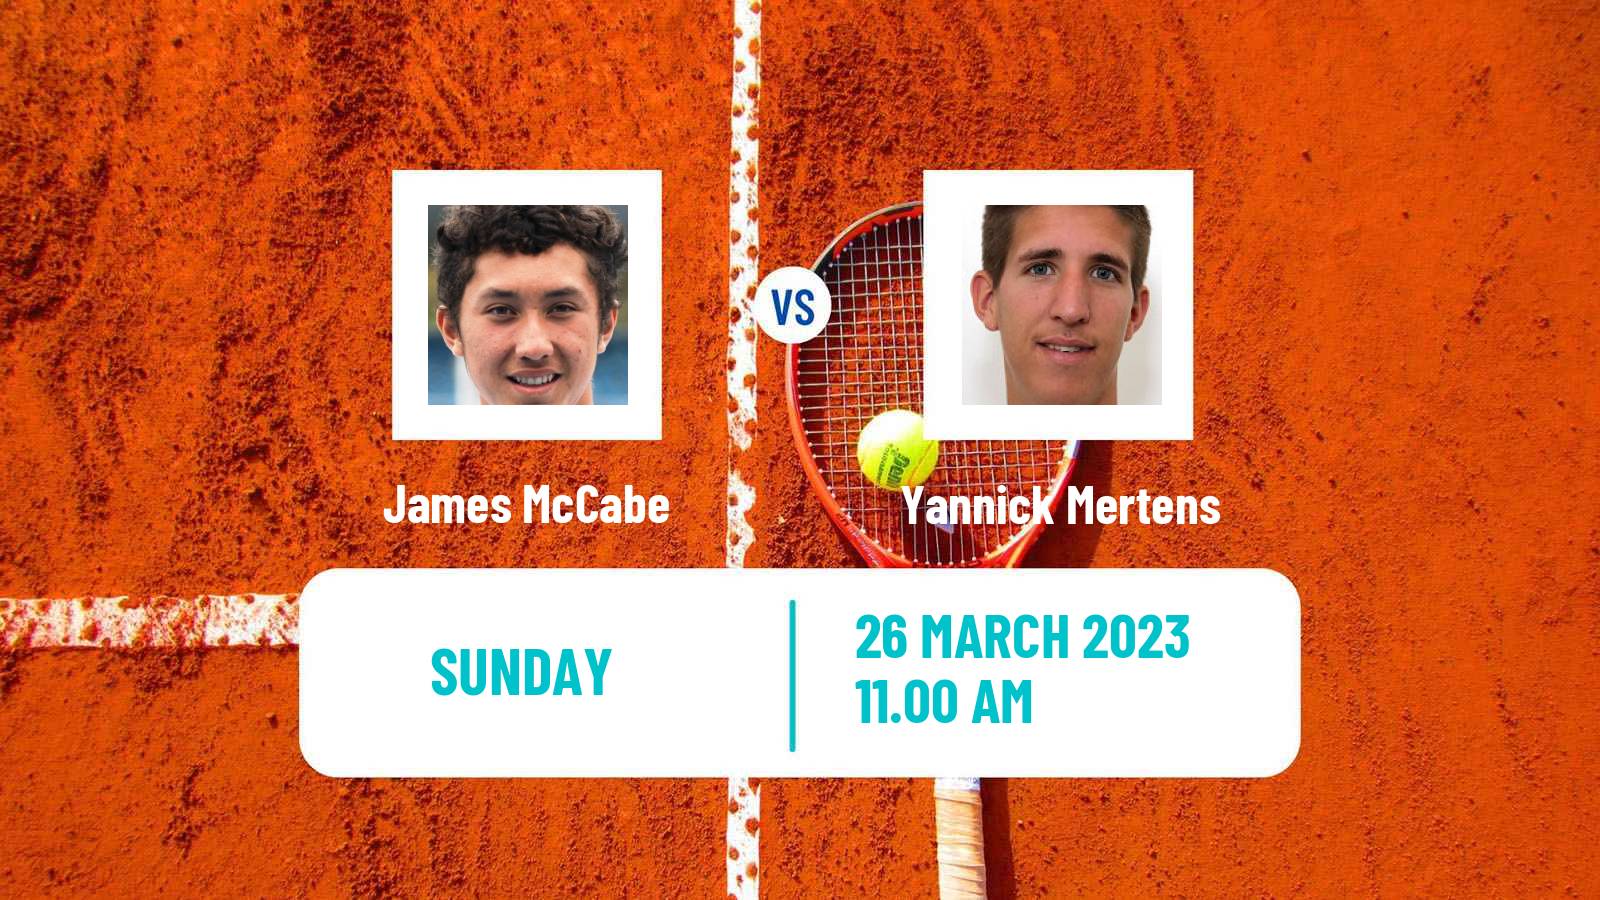 Tennis ATP Challenger James McCabe - Yannick Mertens